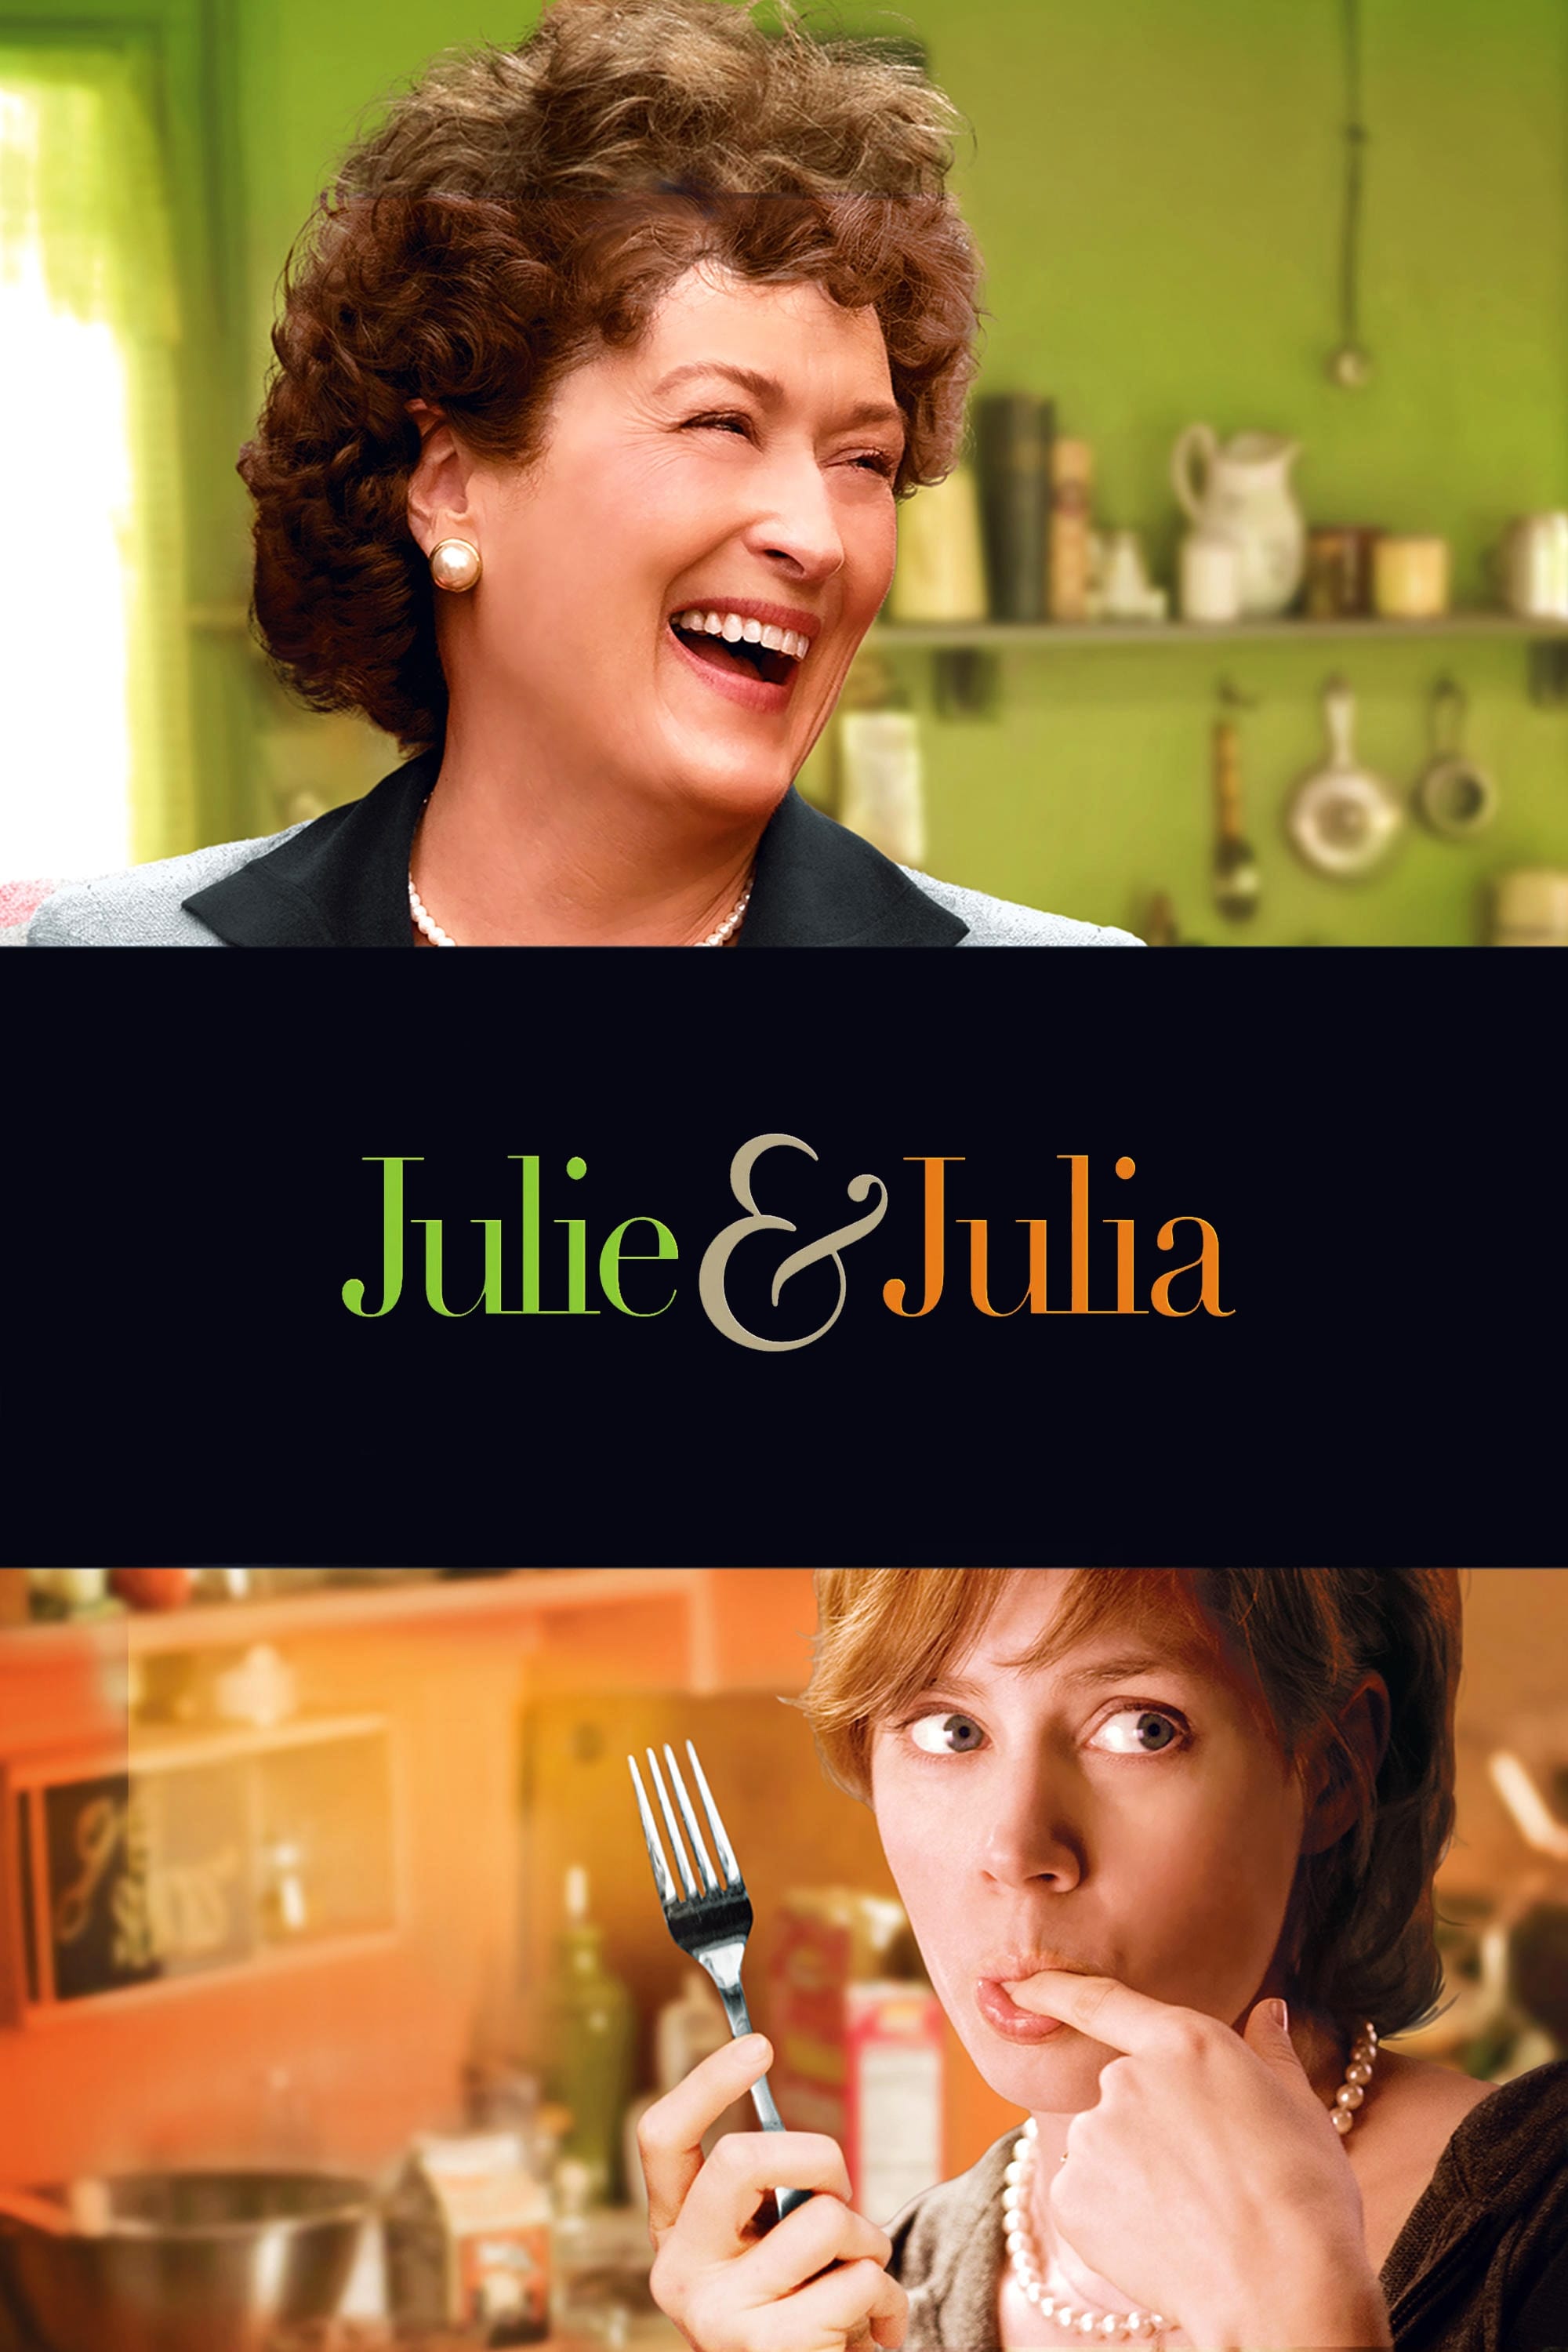 Julie y Julia